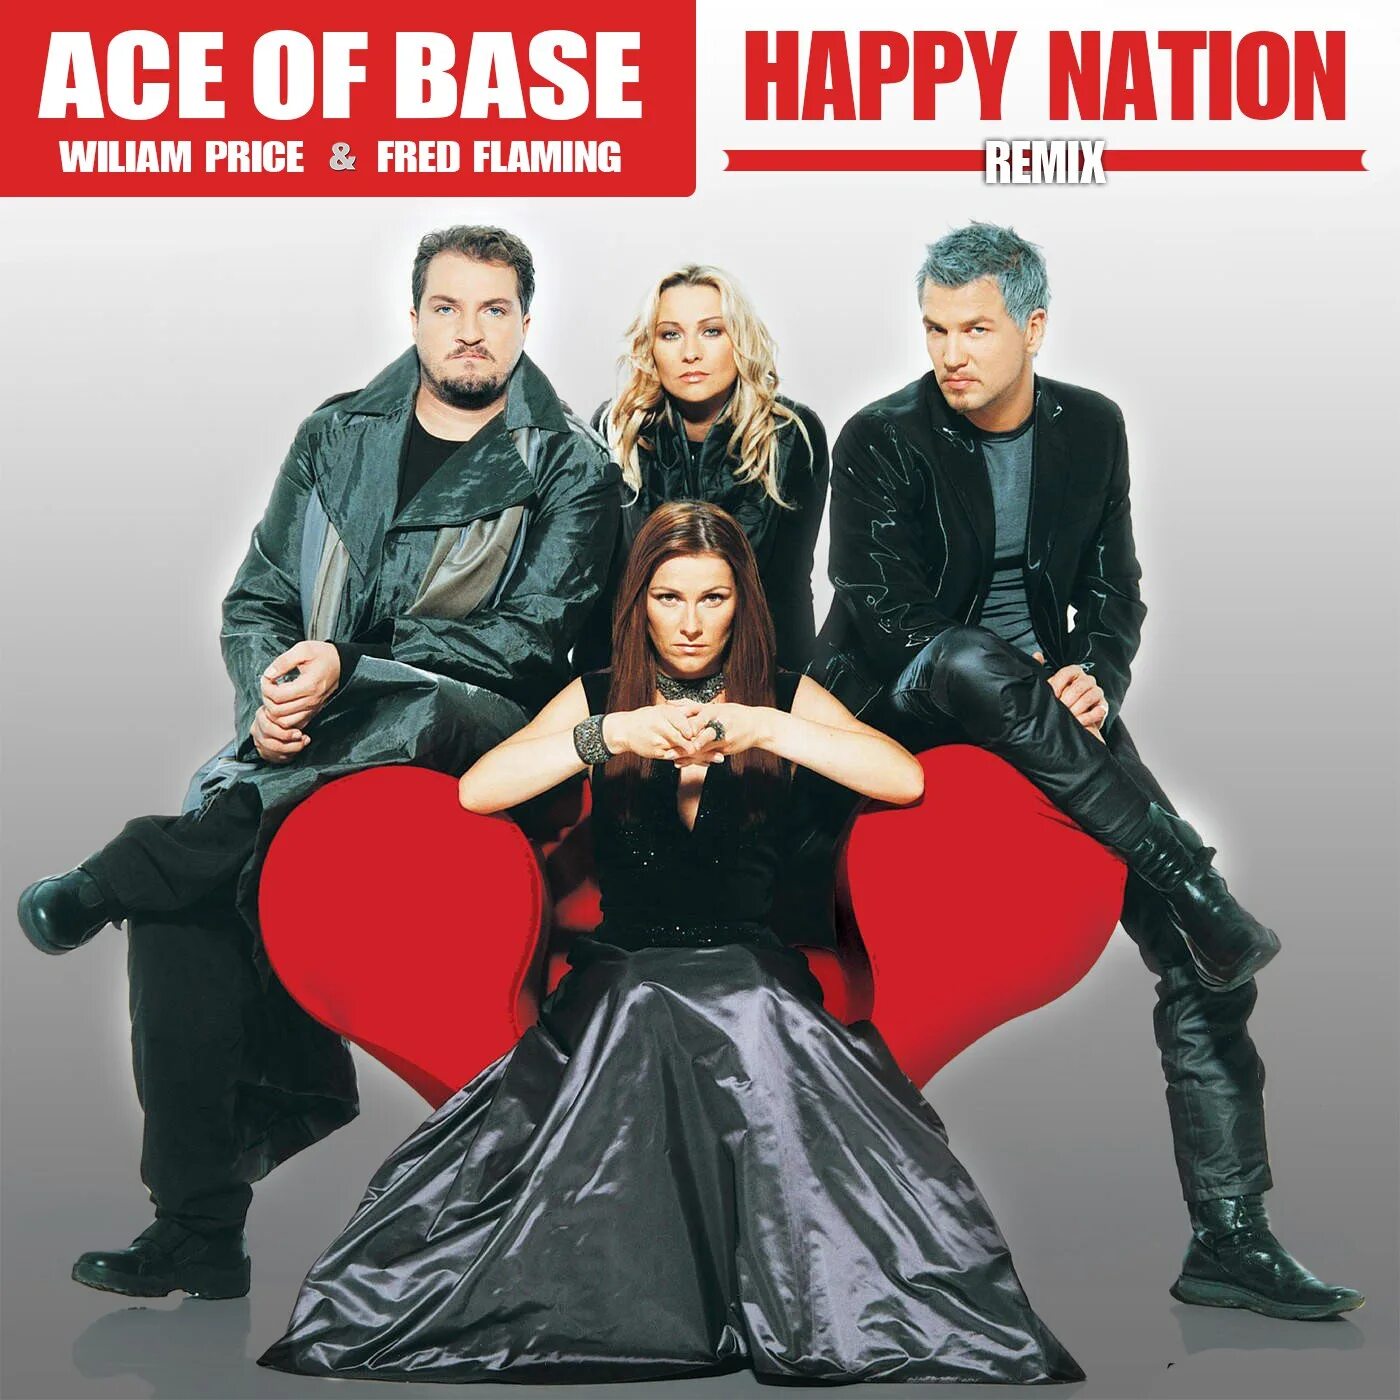 Ace of Base 1992. Ace of Base 2022. Ace of Base Happy Nation. Ace of Base Happy Fred Mykos. Happy nation mykos remix